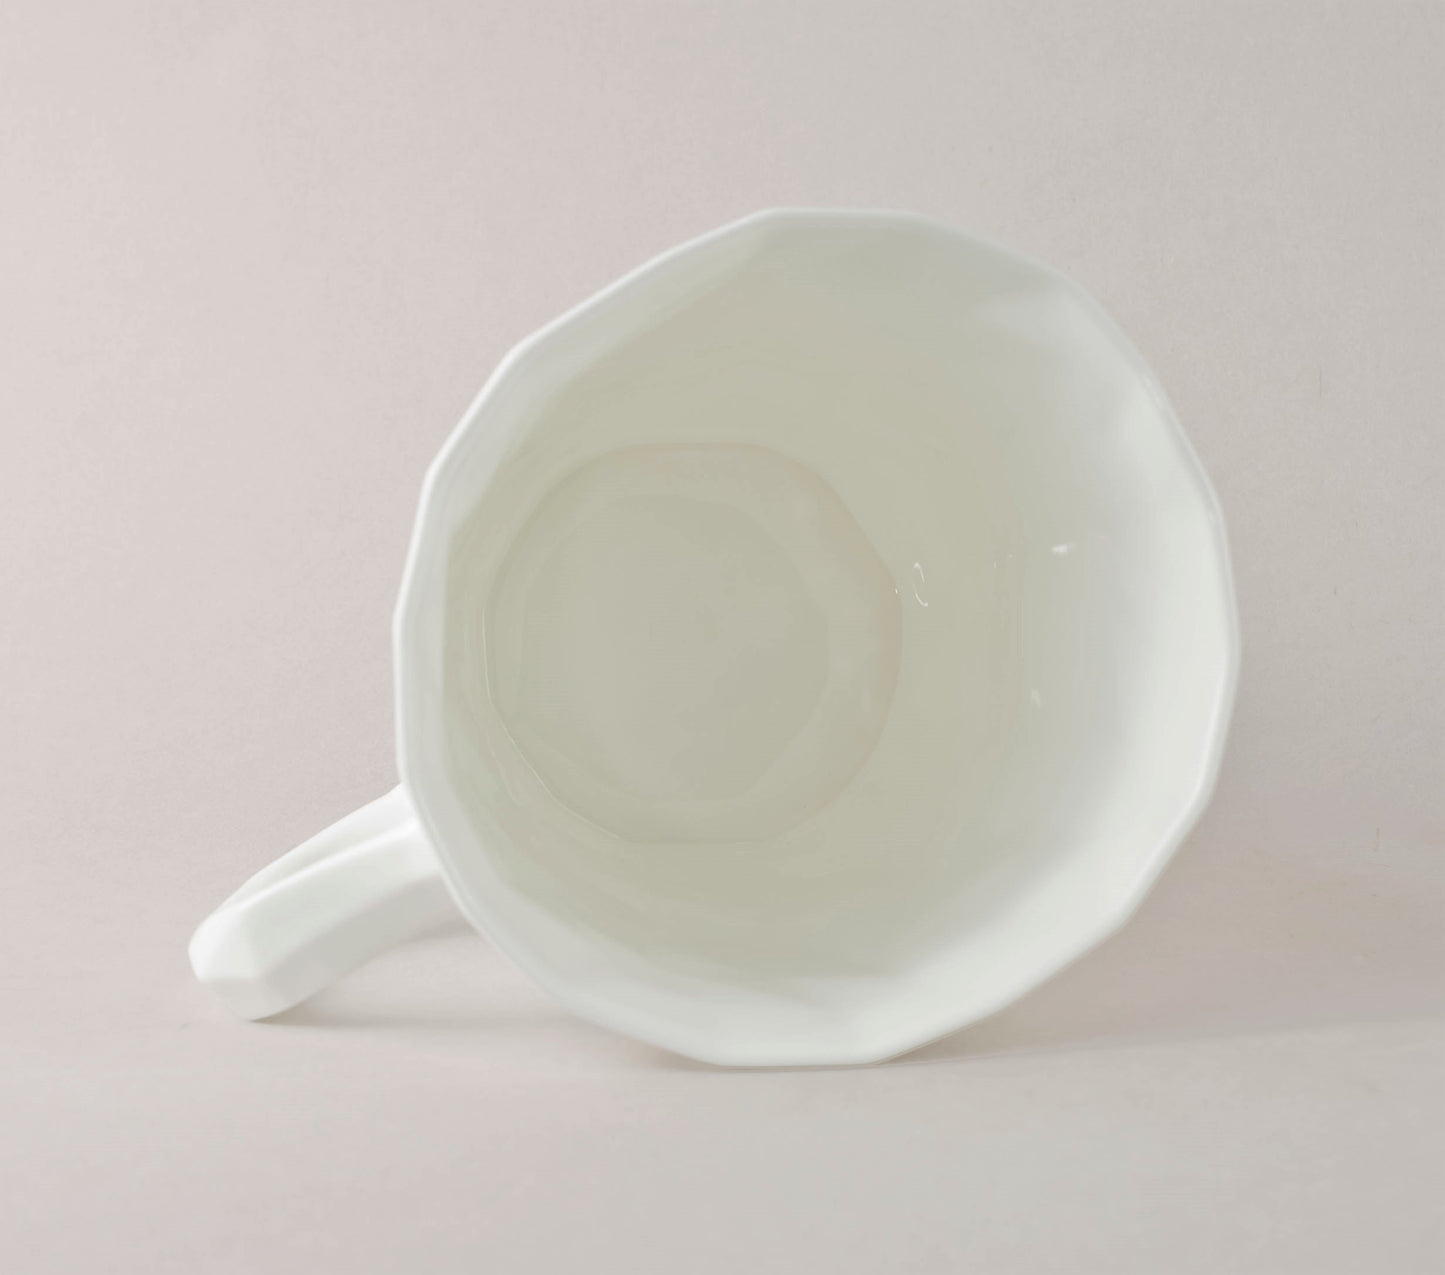 Porcelain Mug Brilliant L